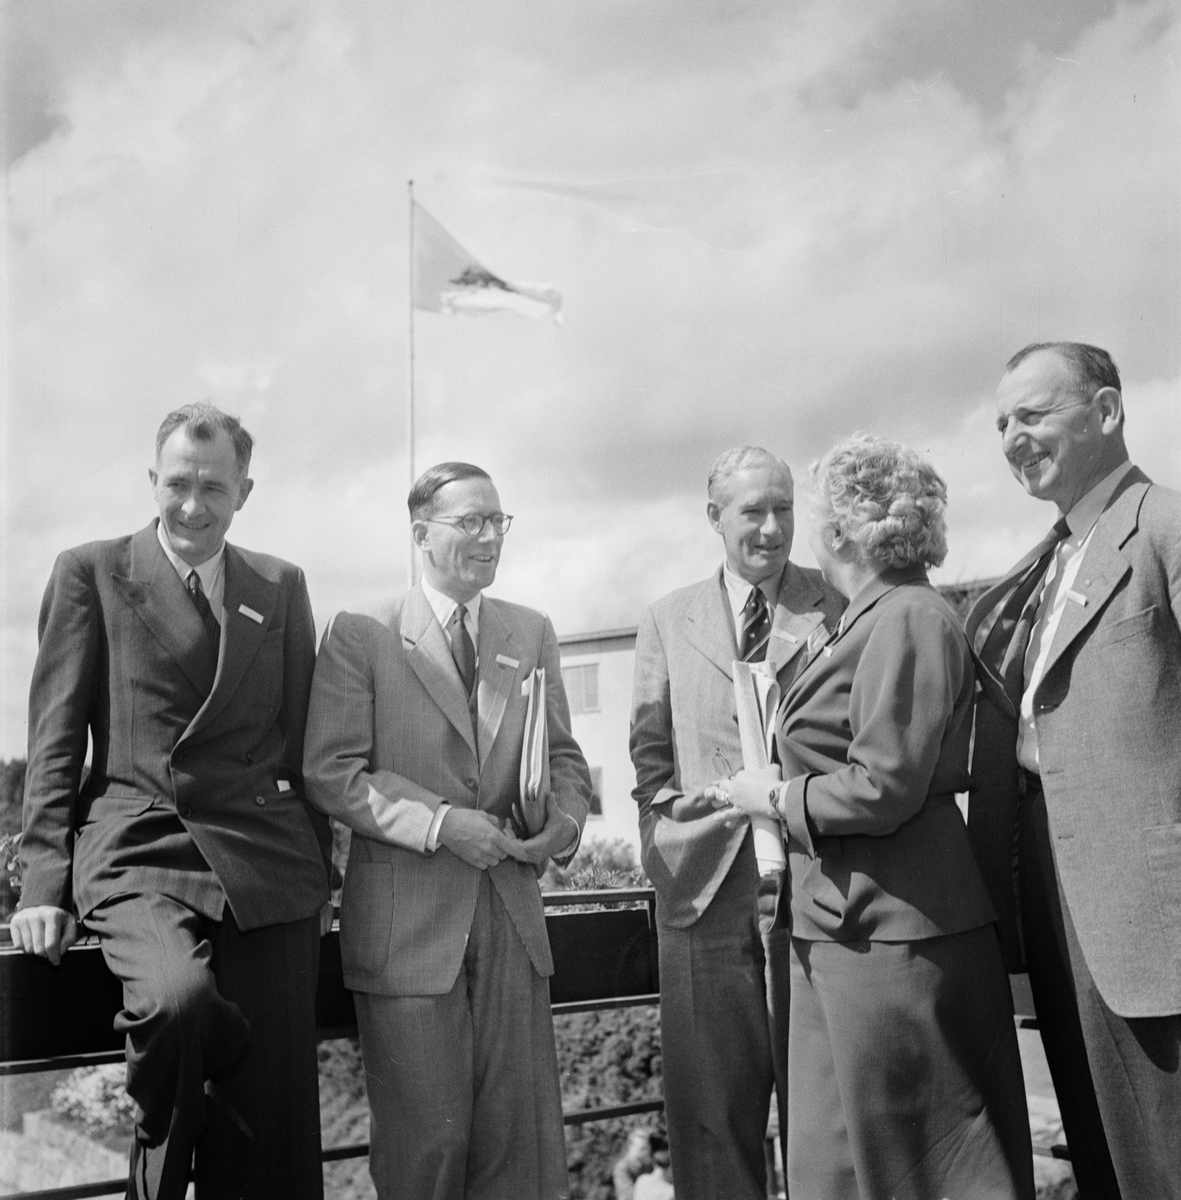 Sparfrämjandet, kongress i Sigtuna, Uppland 1954